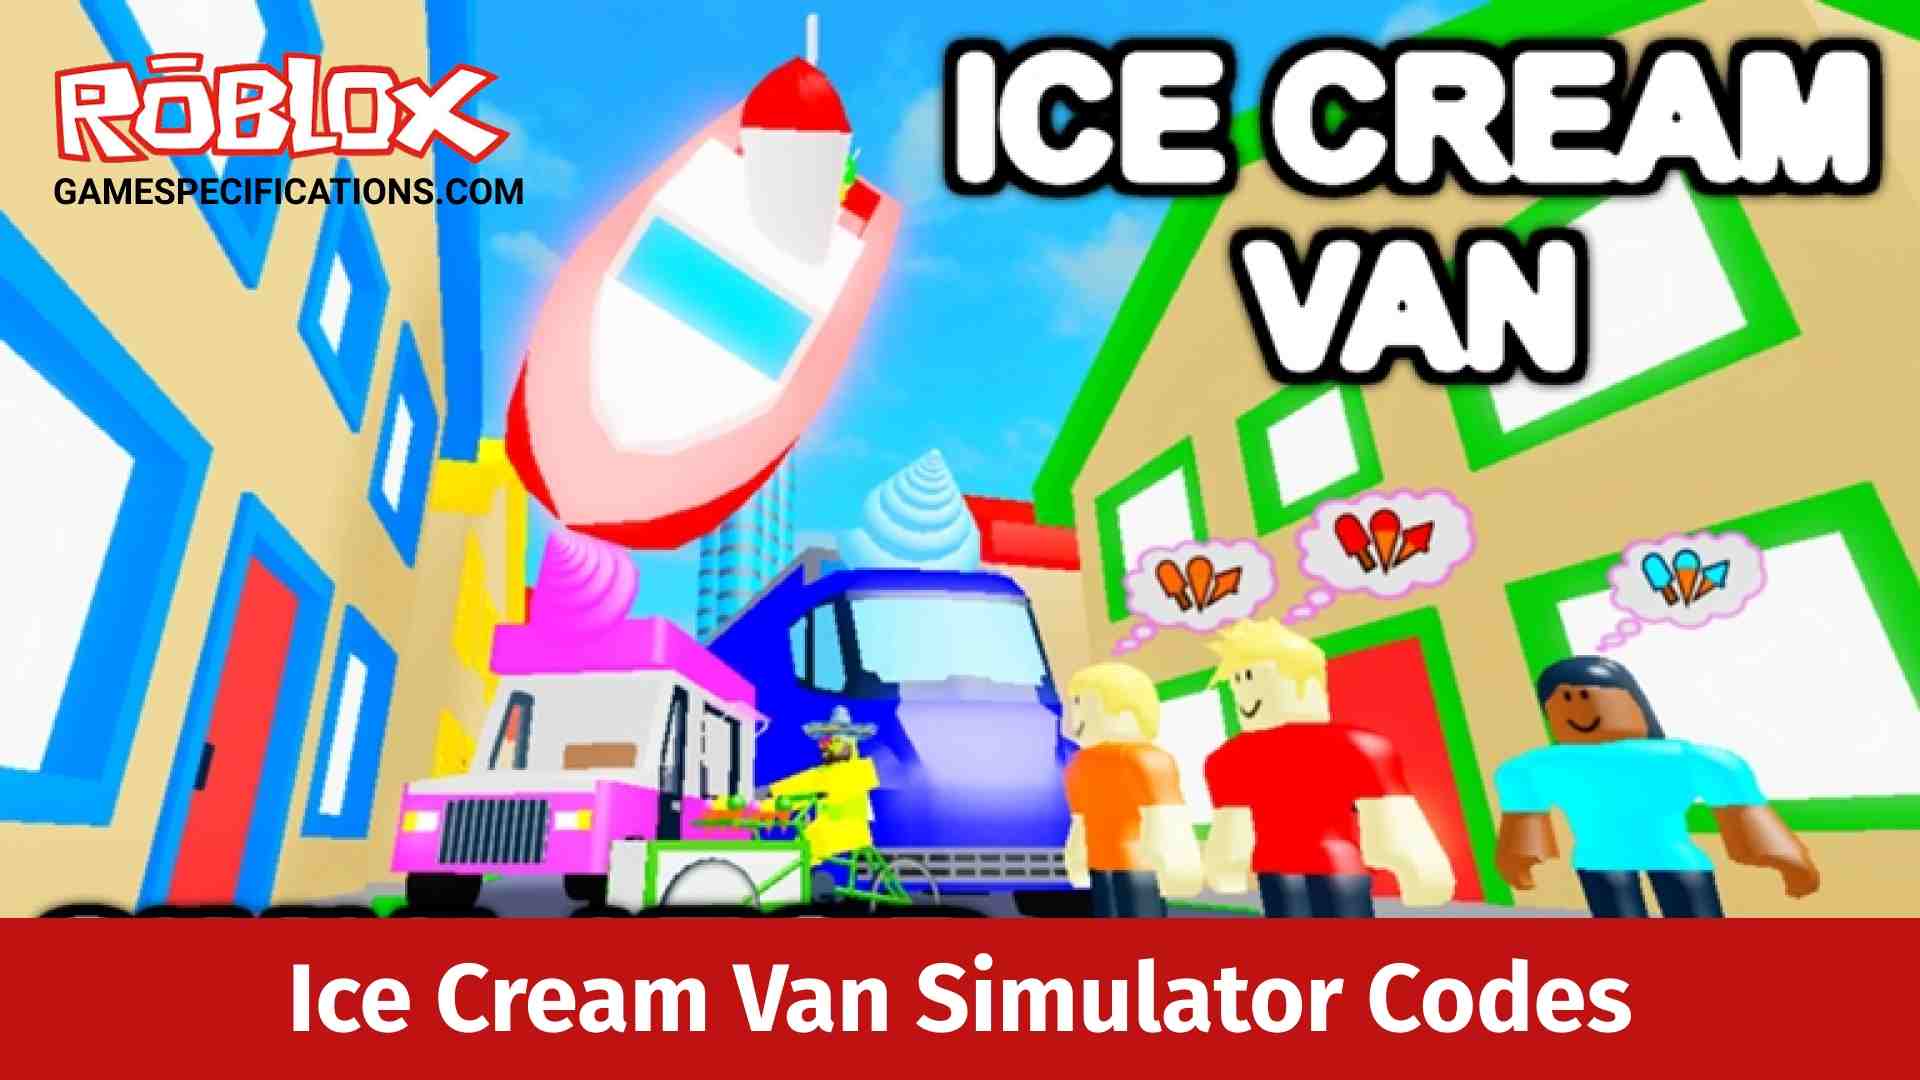 70 Working Roblox Ice Cream Van Simulator Codes 2021 Game Specifications - roblox ice cream simulator how to rebirth fast